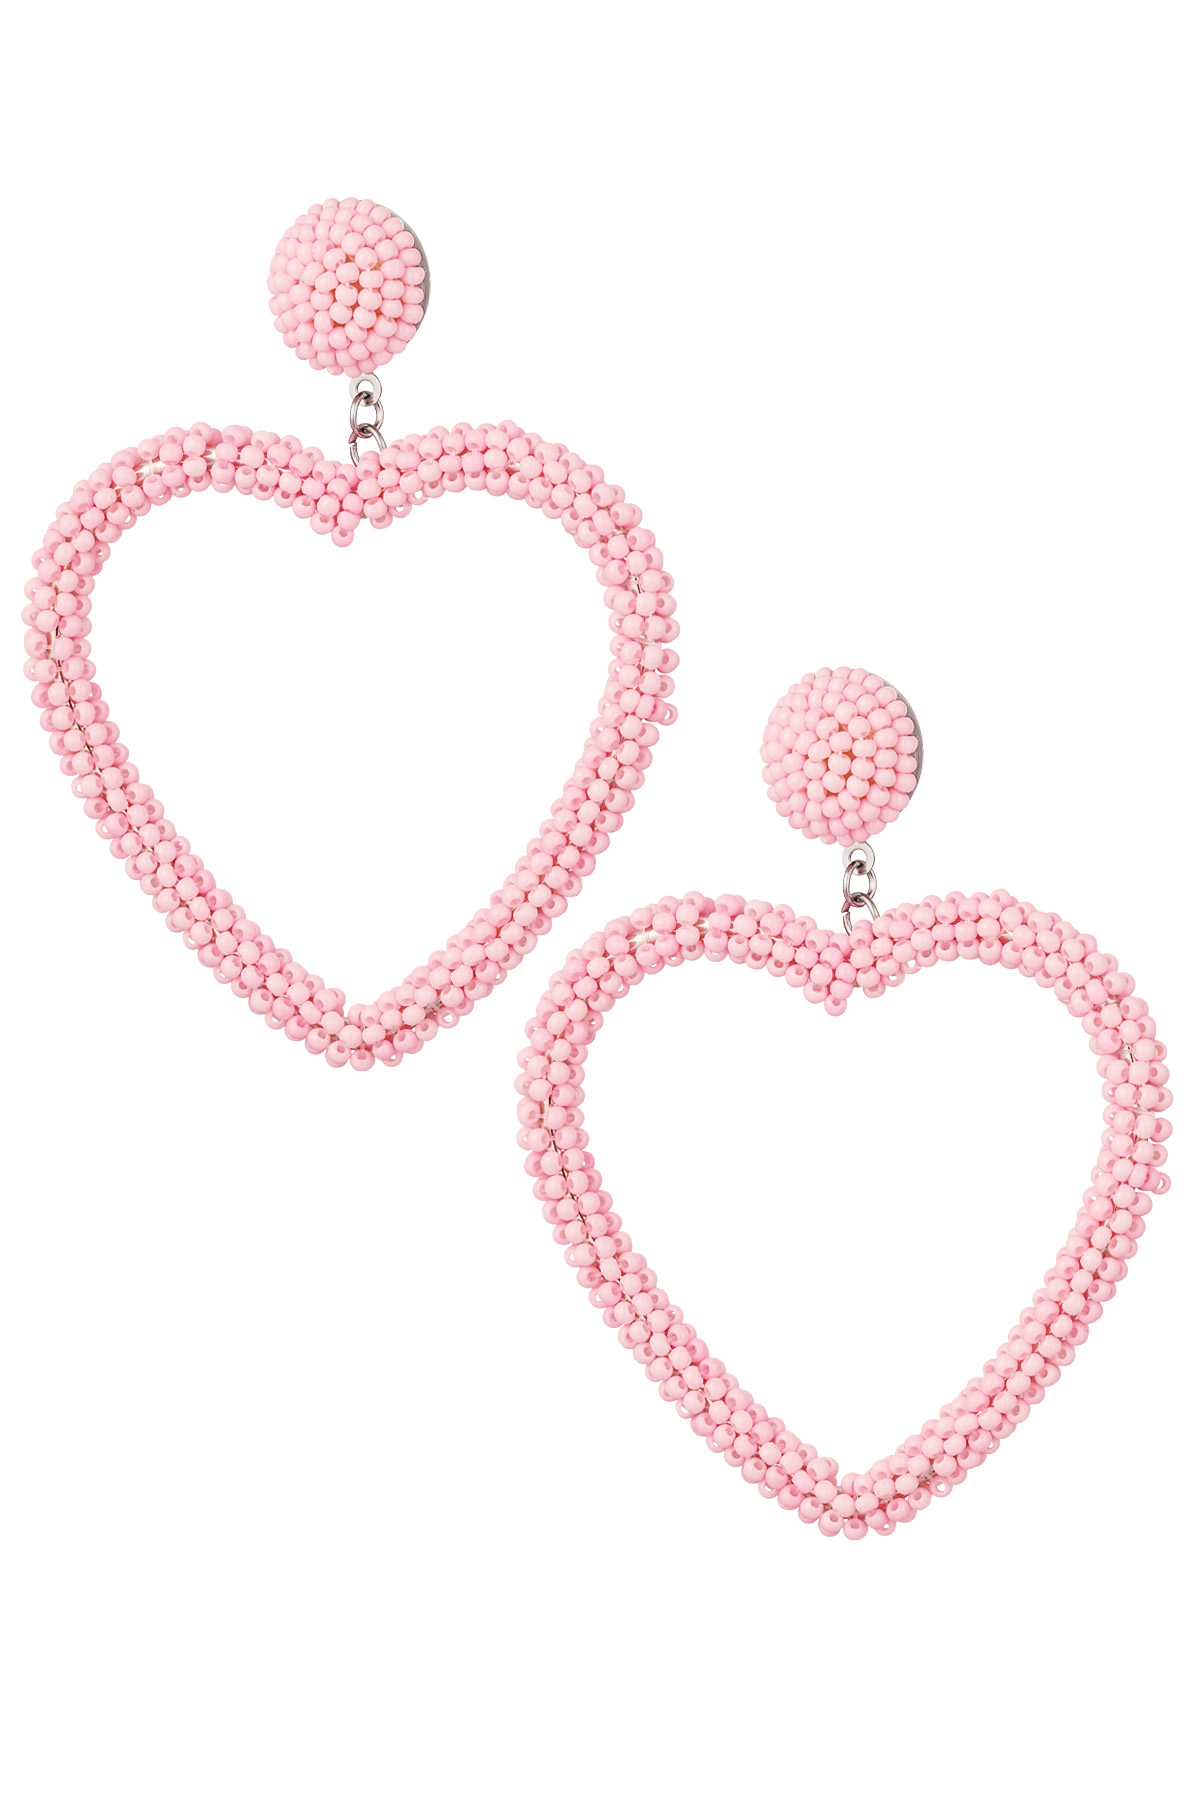 Orecchini perline caramelle - rosa pastello Acciaio inossidabile h5 